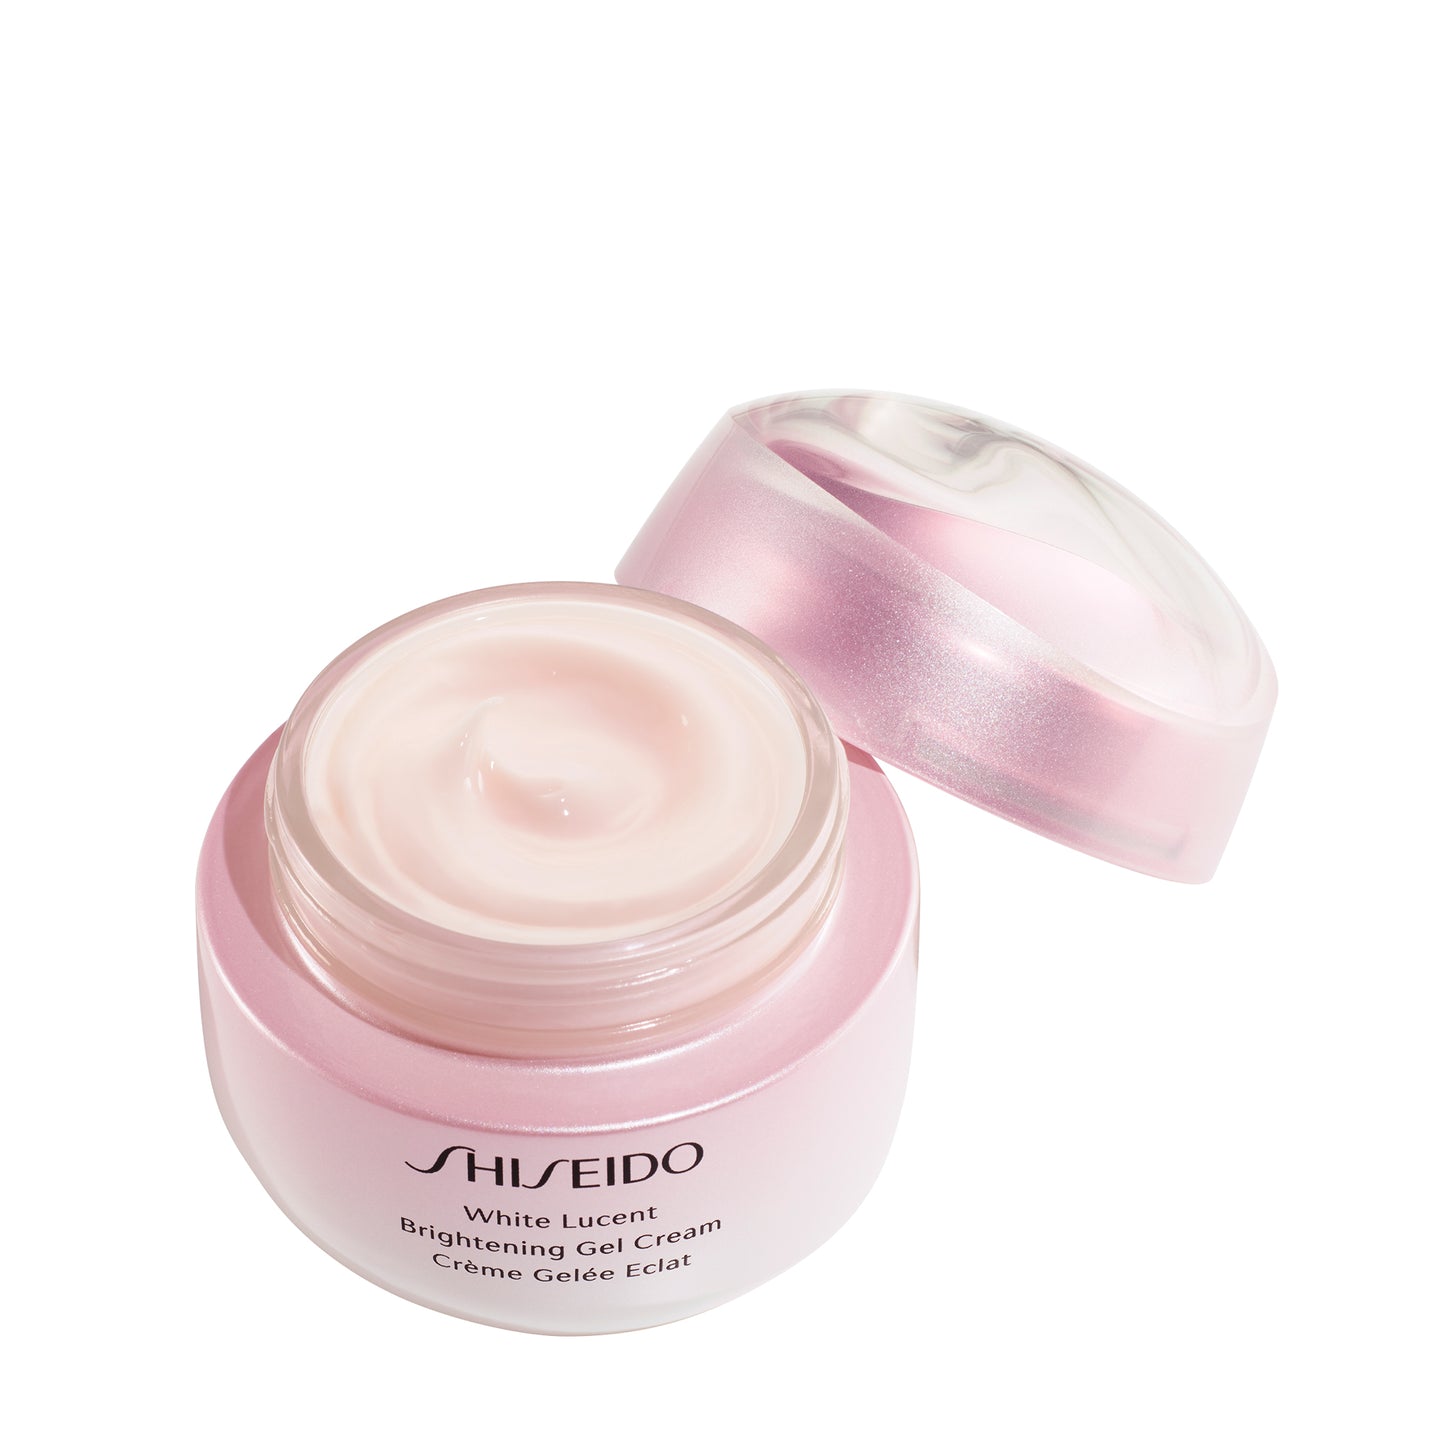 Shiseido White Lucent by Shiseido Brightening Gel Cream 50ml